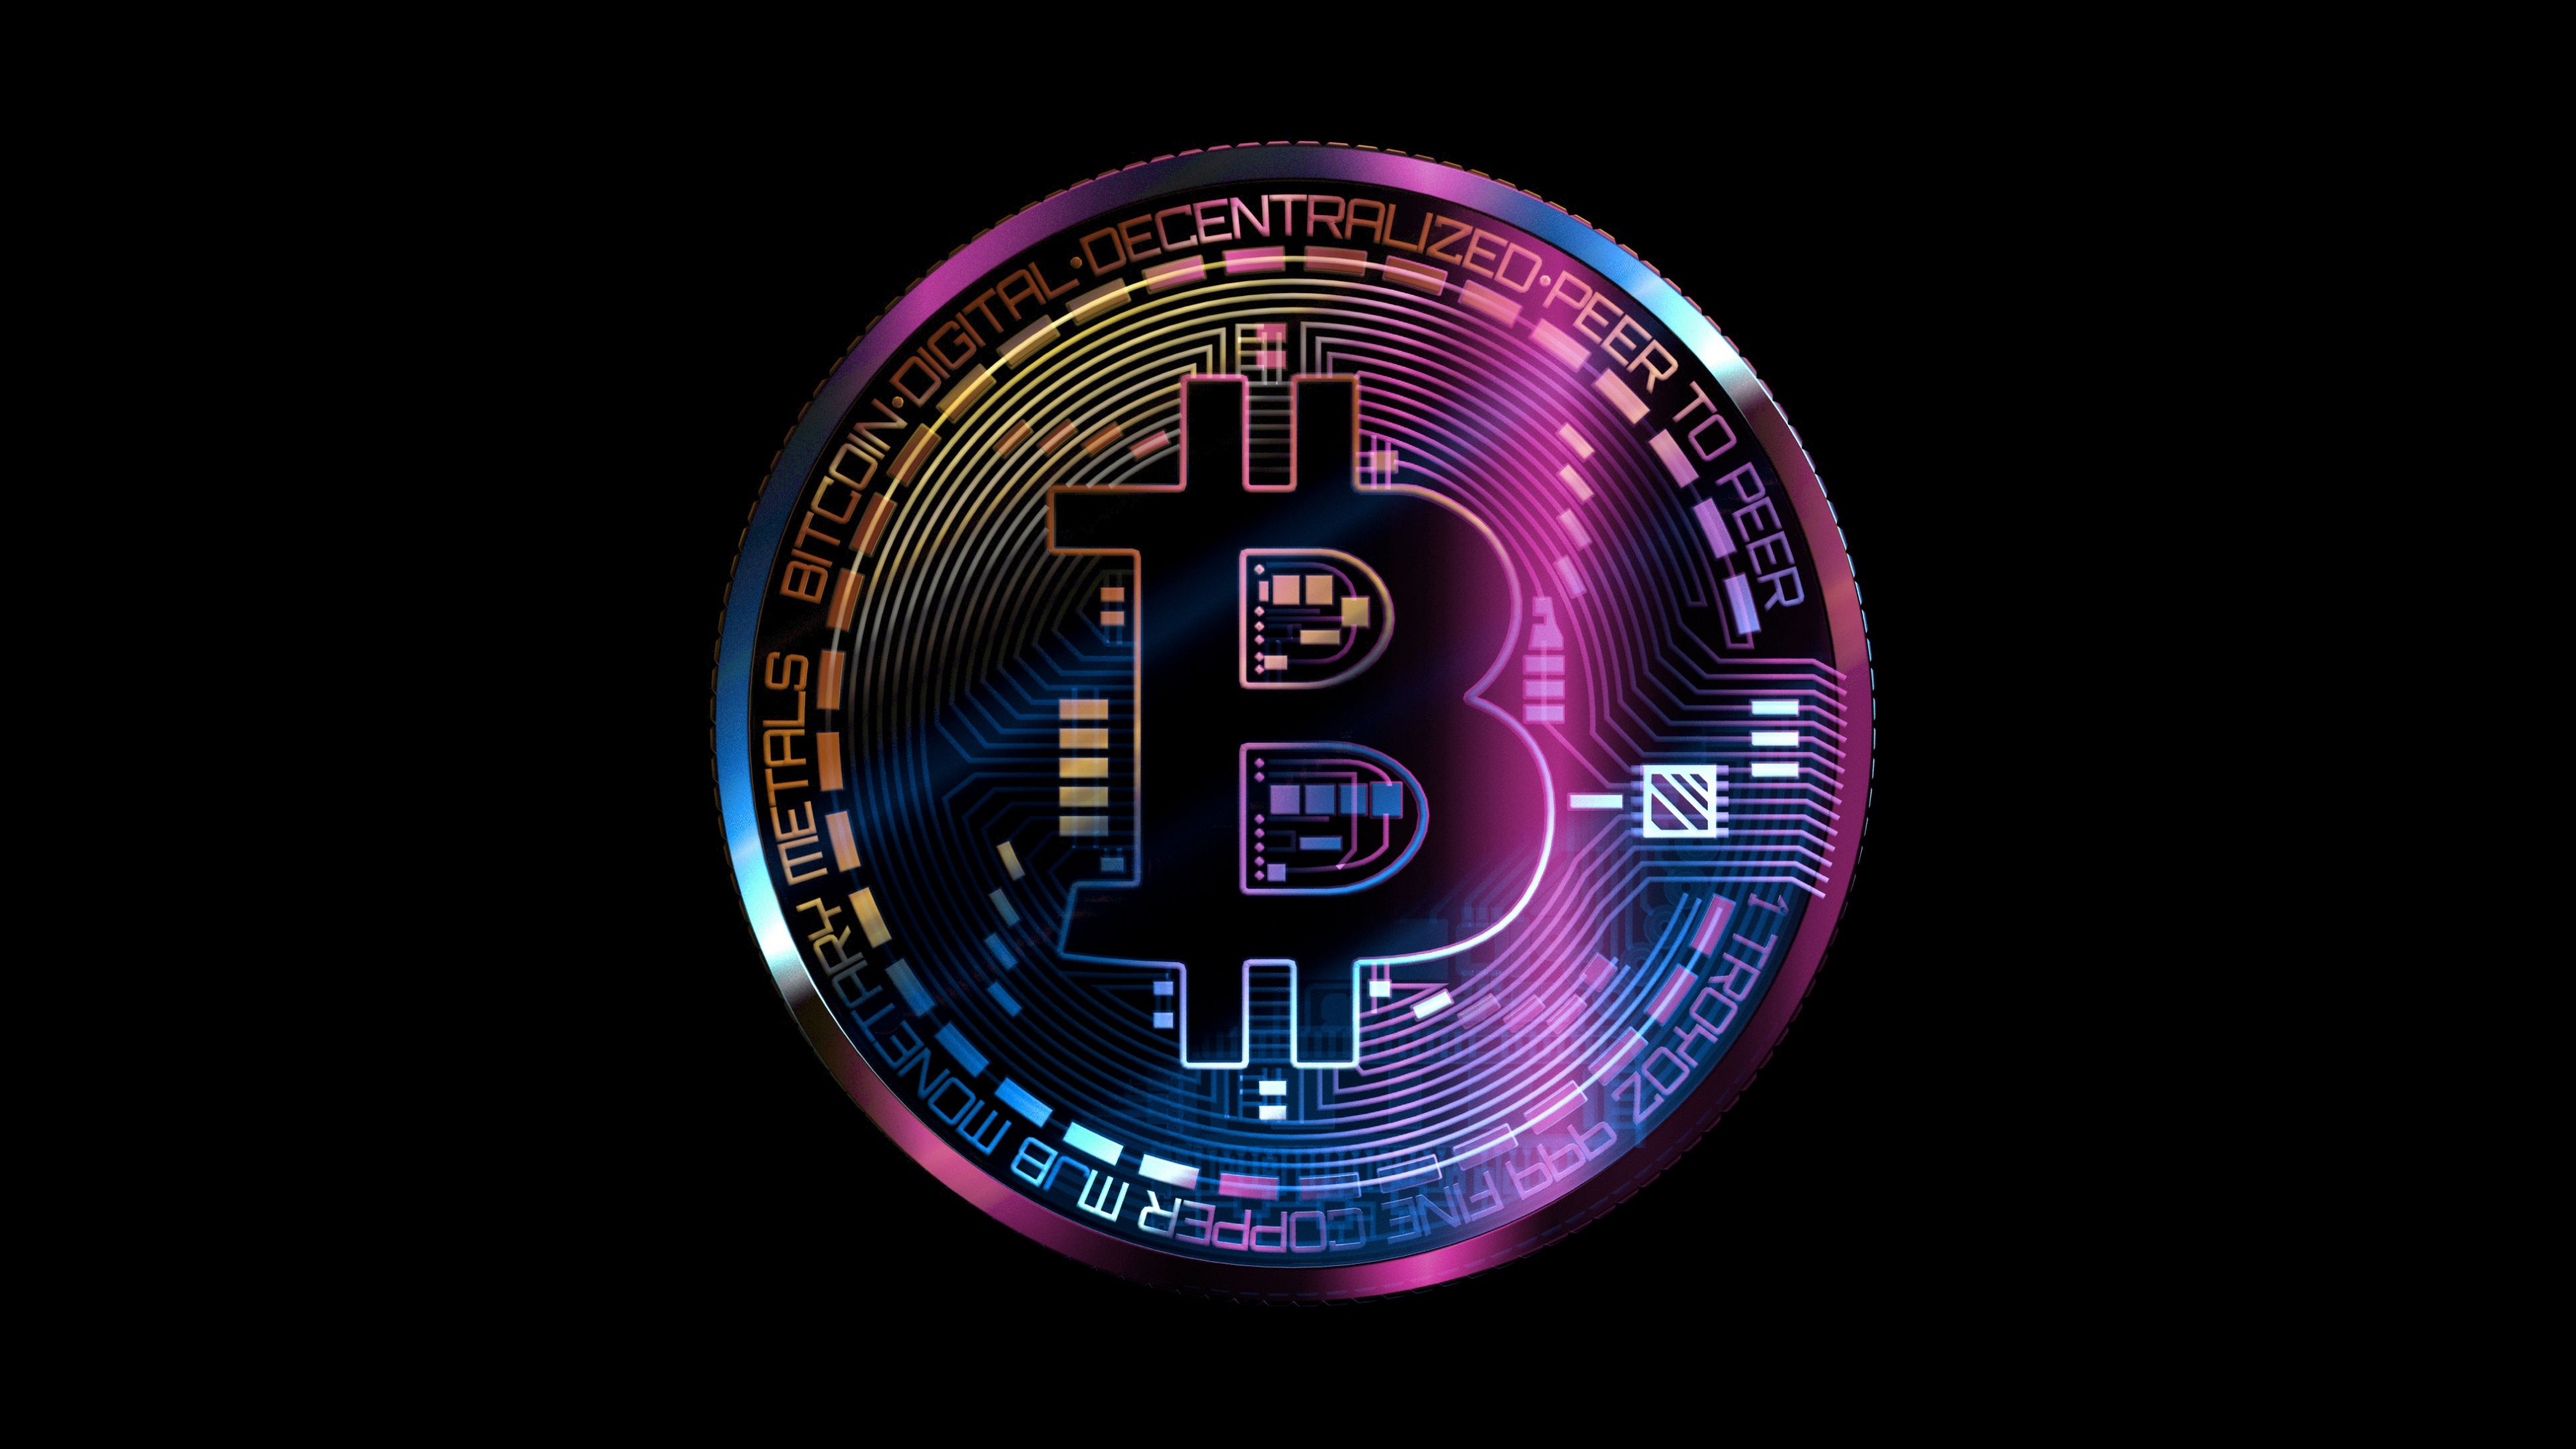 Bitcoin logo on an image of a digital coin. 